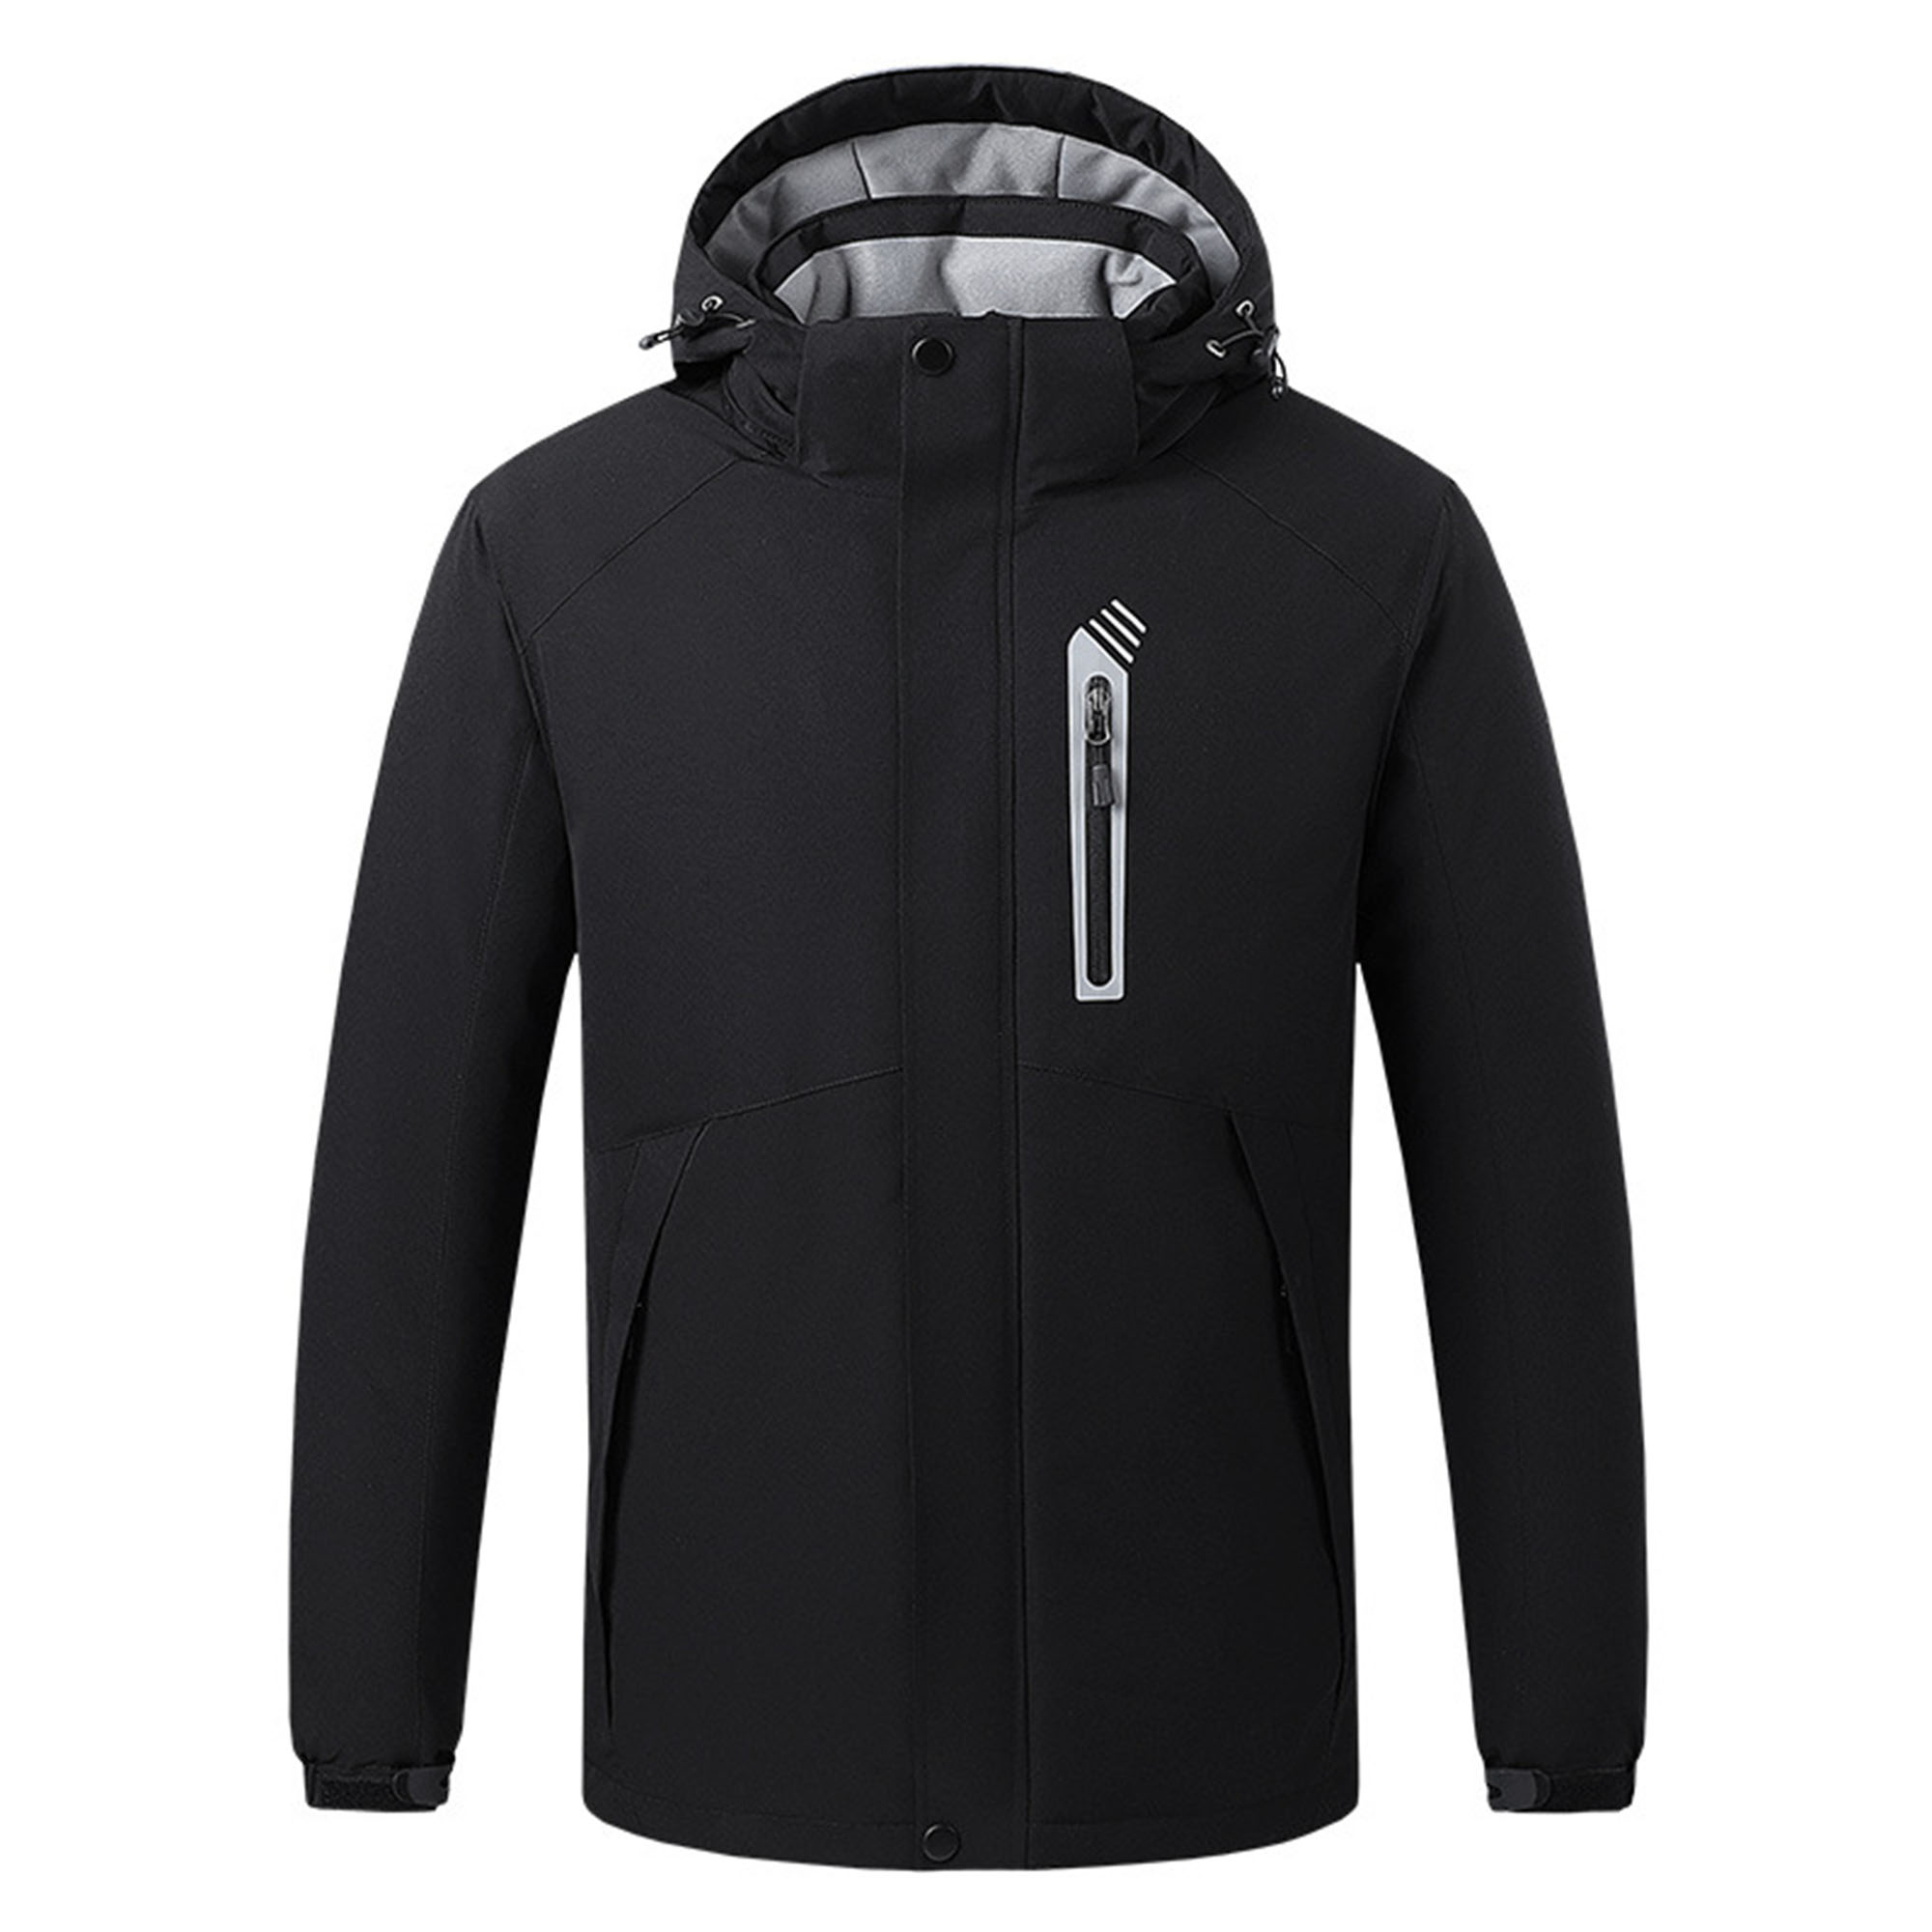 CVLIFE Men's Heated Jacket Full Zip with Detachable Hood (Power Bank is Not Included) Winter Body Warmer Unisex Women Lightweight Heating Coat Clothing - image 1 of 3